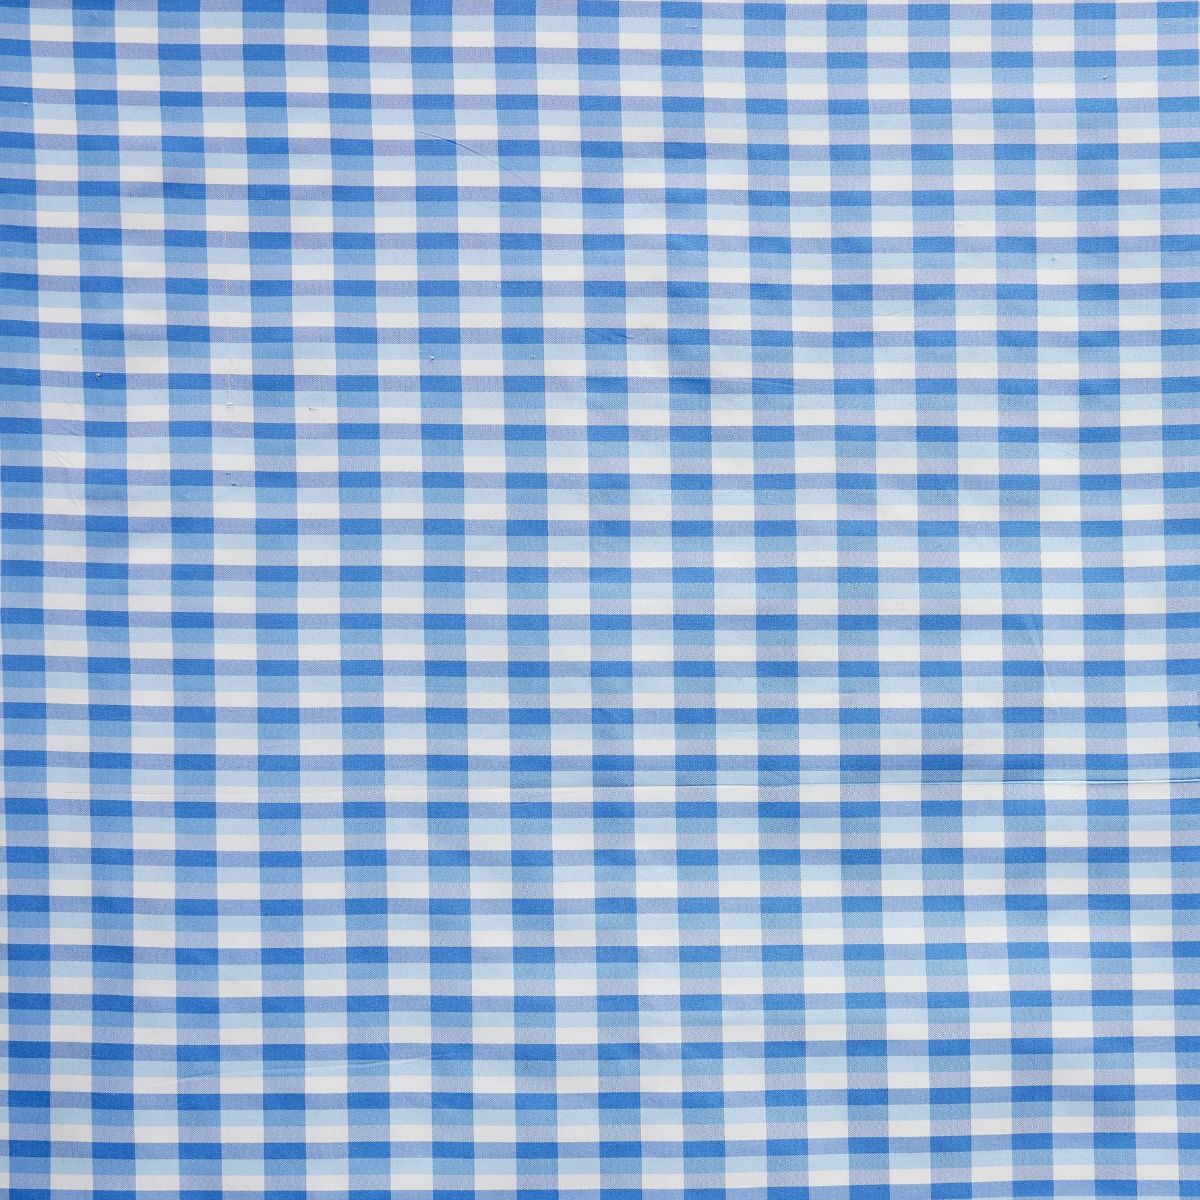 Vichy Check Fabric in Cornflower Blue